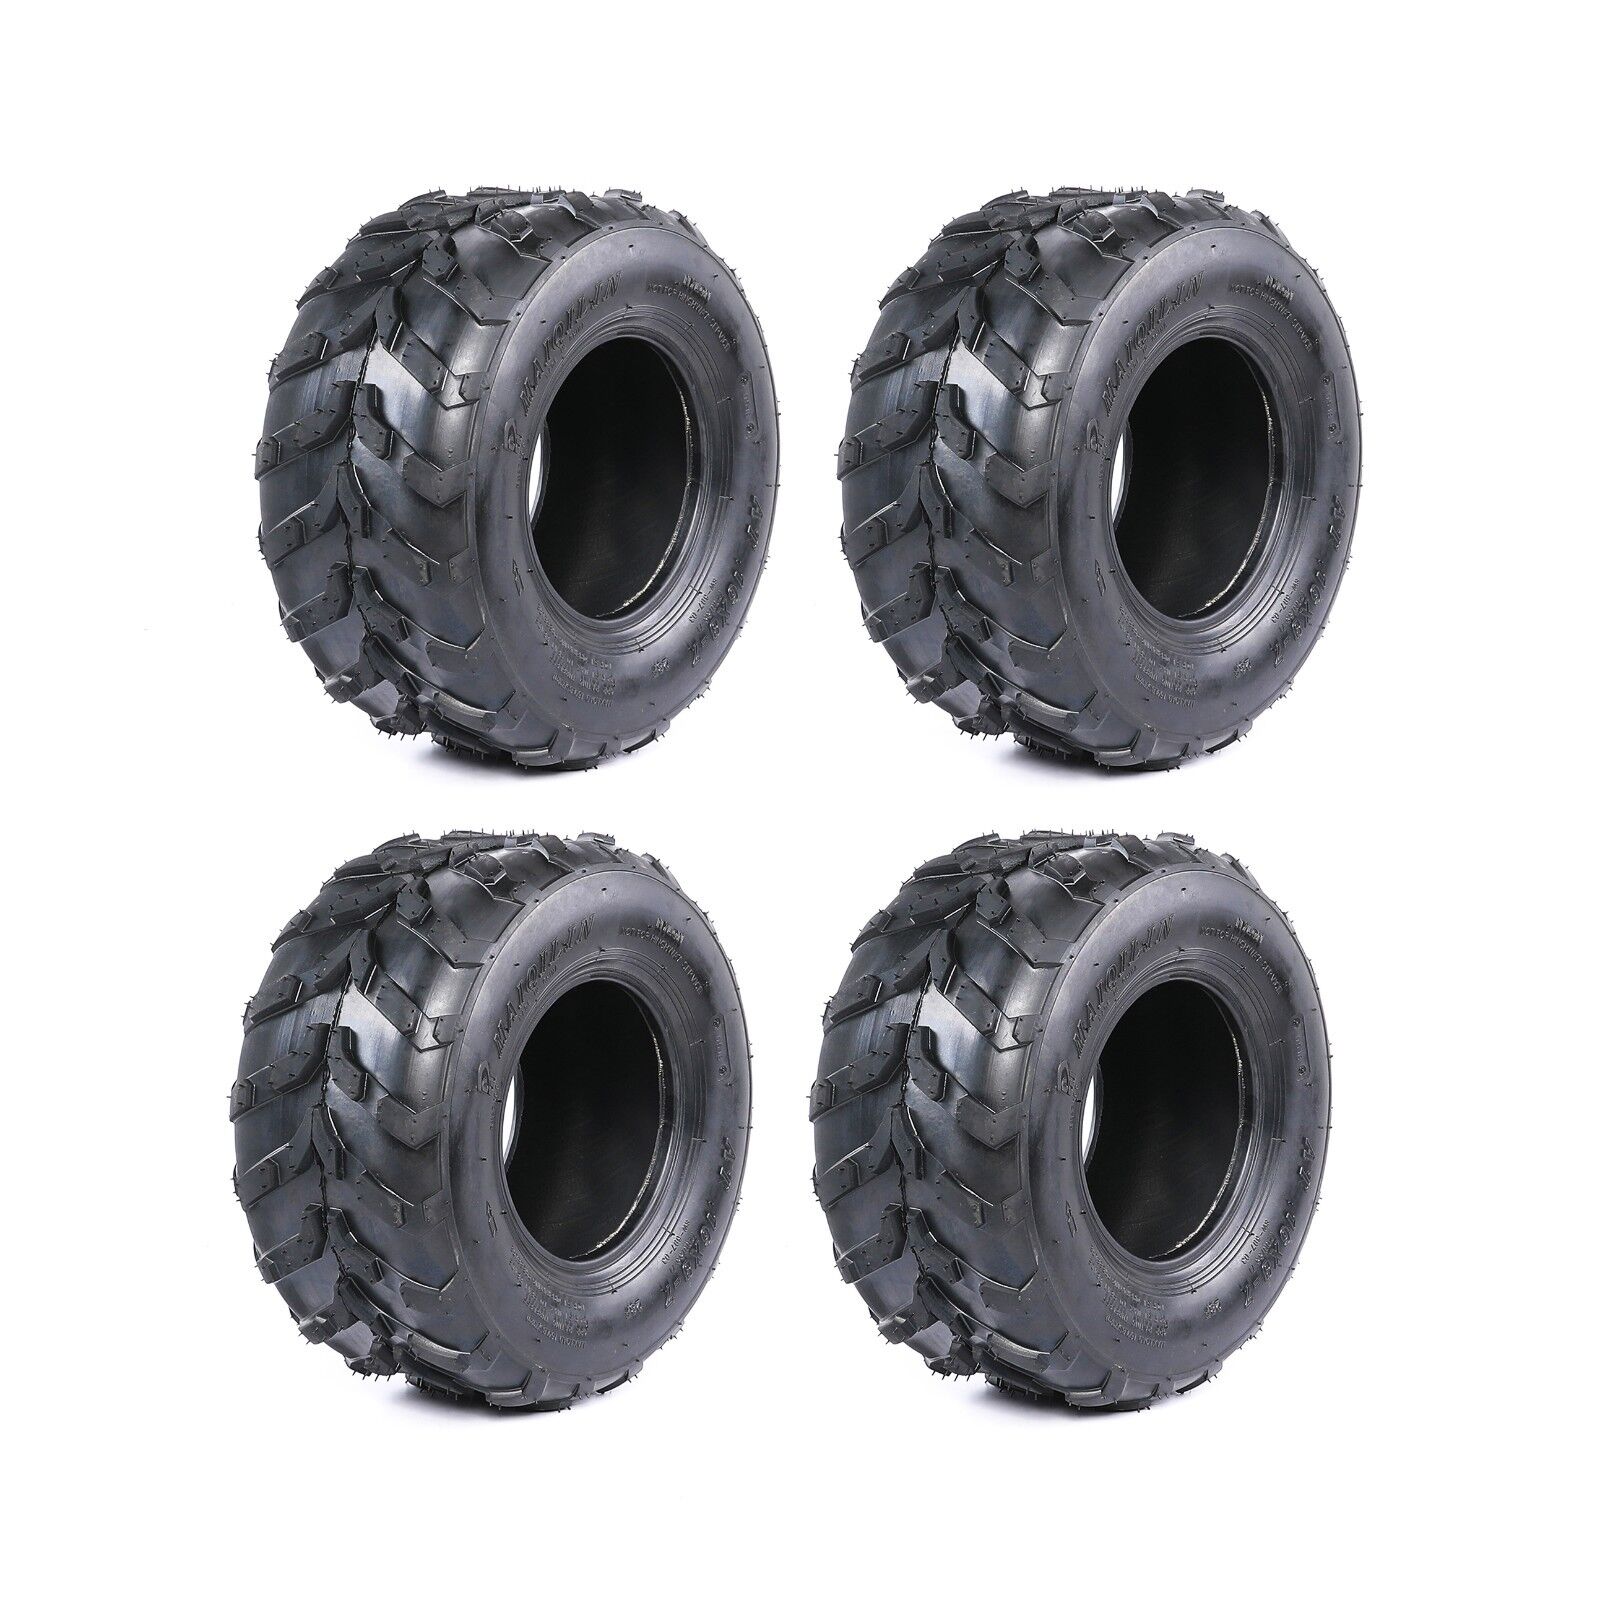 4 FOUR 16x8.00-7 ATV Knobby Tires Tire Tyre 16x8-7 16/8-7 16x8x7